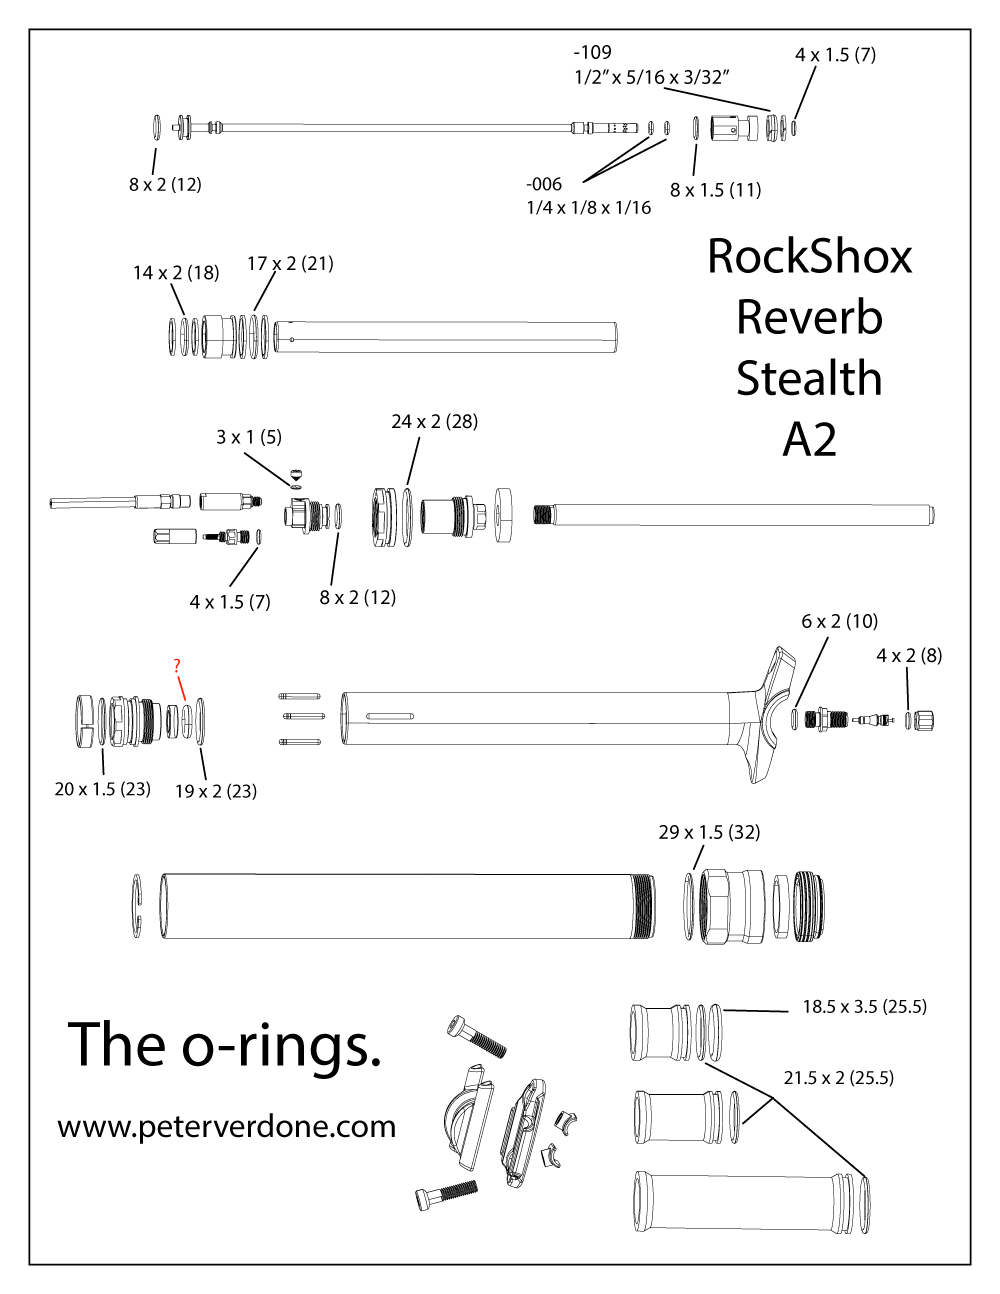 rockshox reverb stealth service